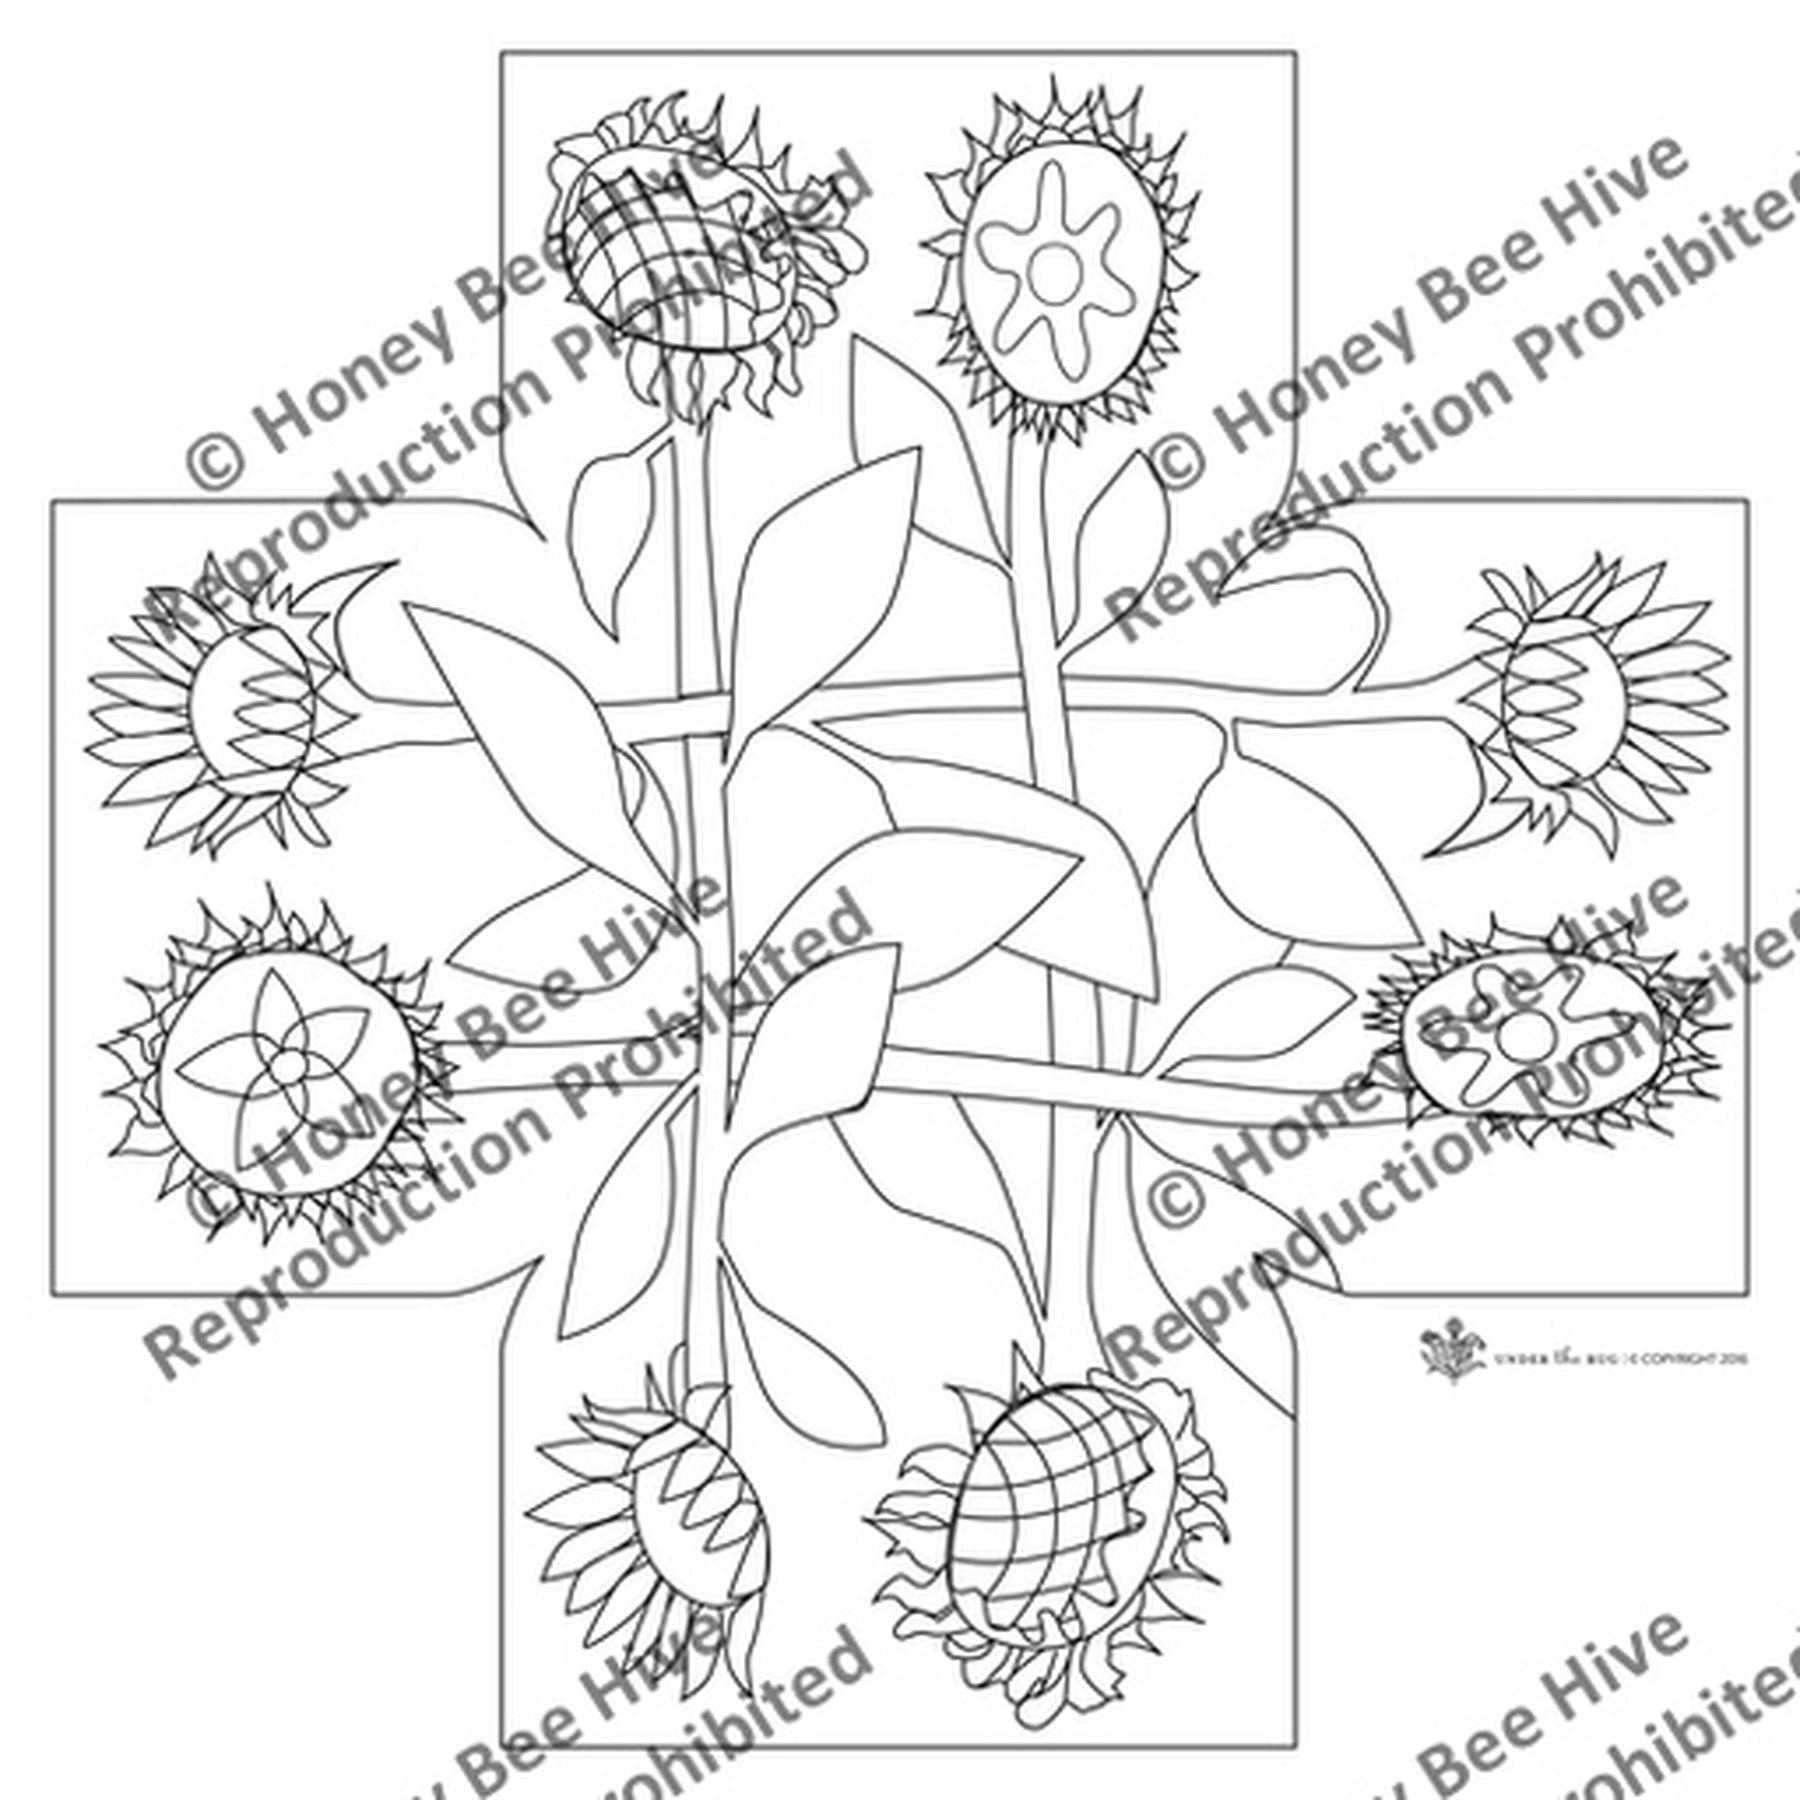 Sunflower - Square Footstool Pattern, rug hooking pattern